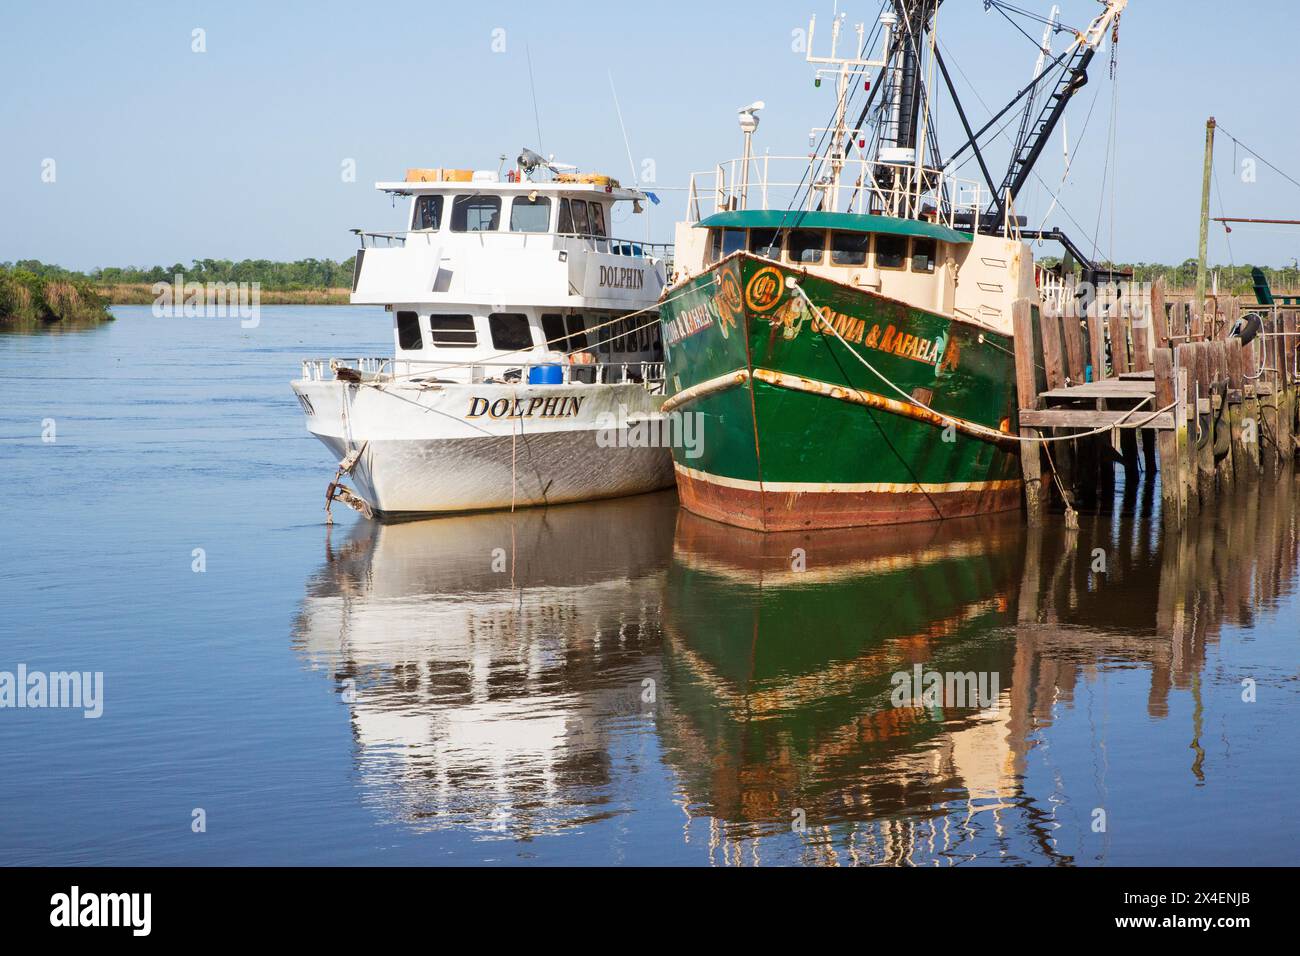 USA, Georgia, Darien. Shrimp boats docked at Darien. (Editorial Use Only) Stock Photo